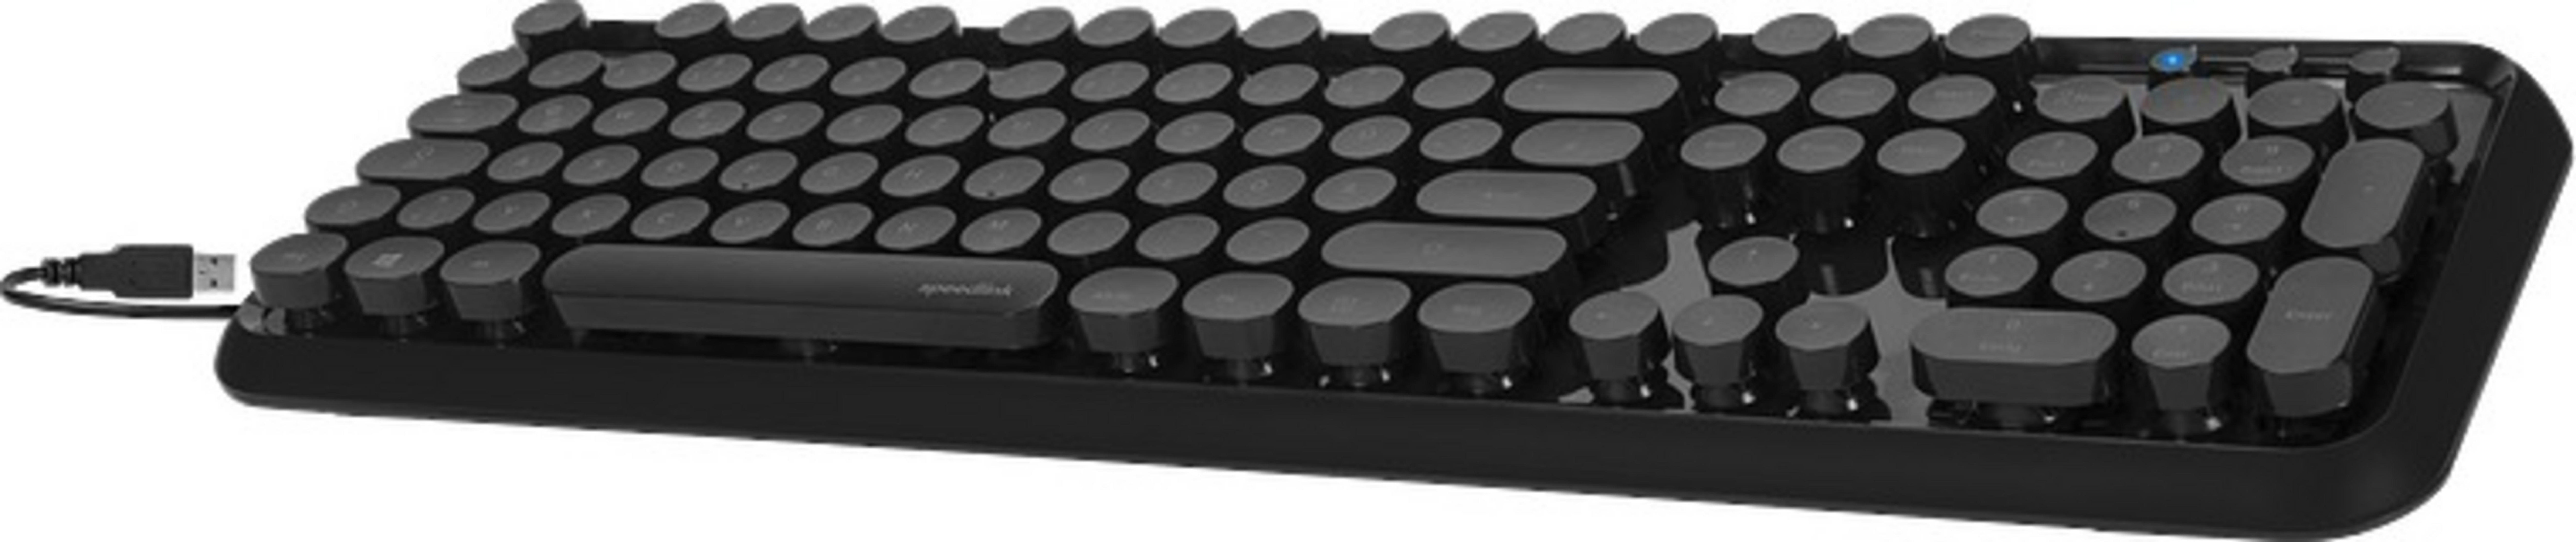 SPEEDLINK SL-640004-BK CIRCLE RETRO BLACK, Tastatur